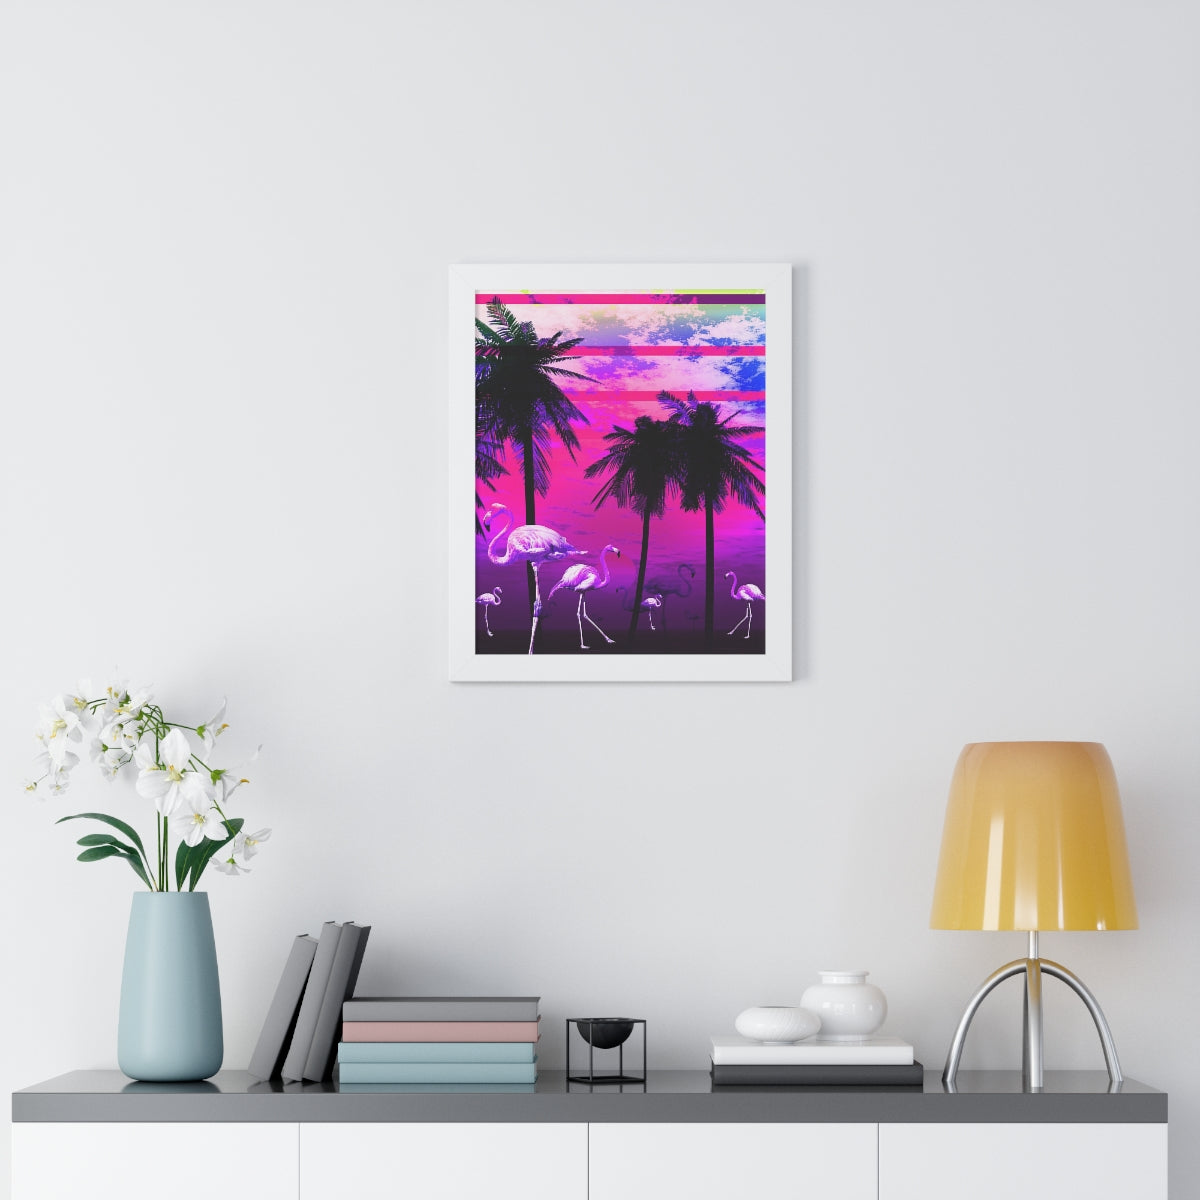 Getrott Pink Beach Flamingo Sunset Framed Paper Posters LexJet Premium 200 gsm paper